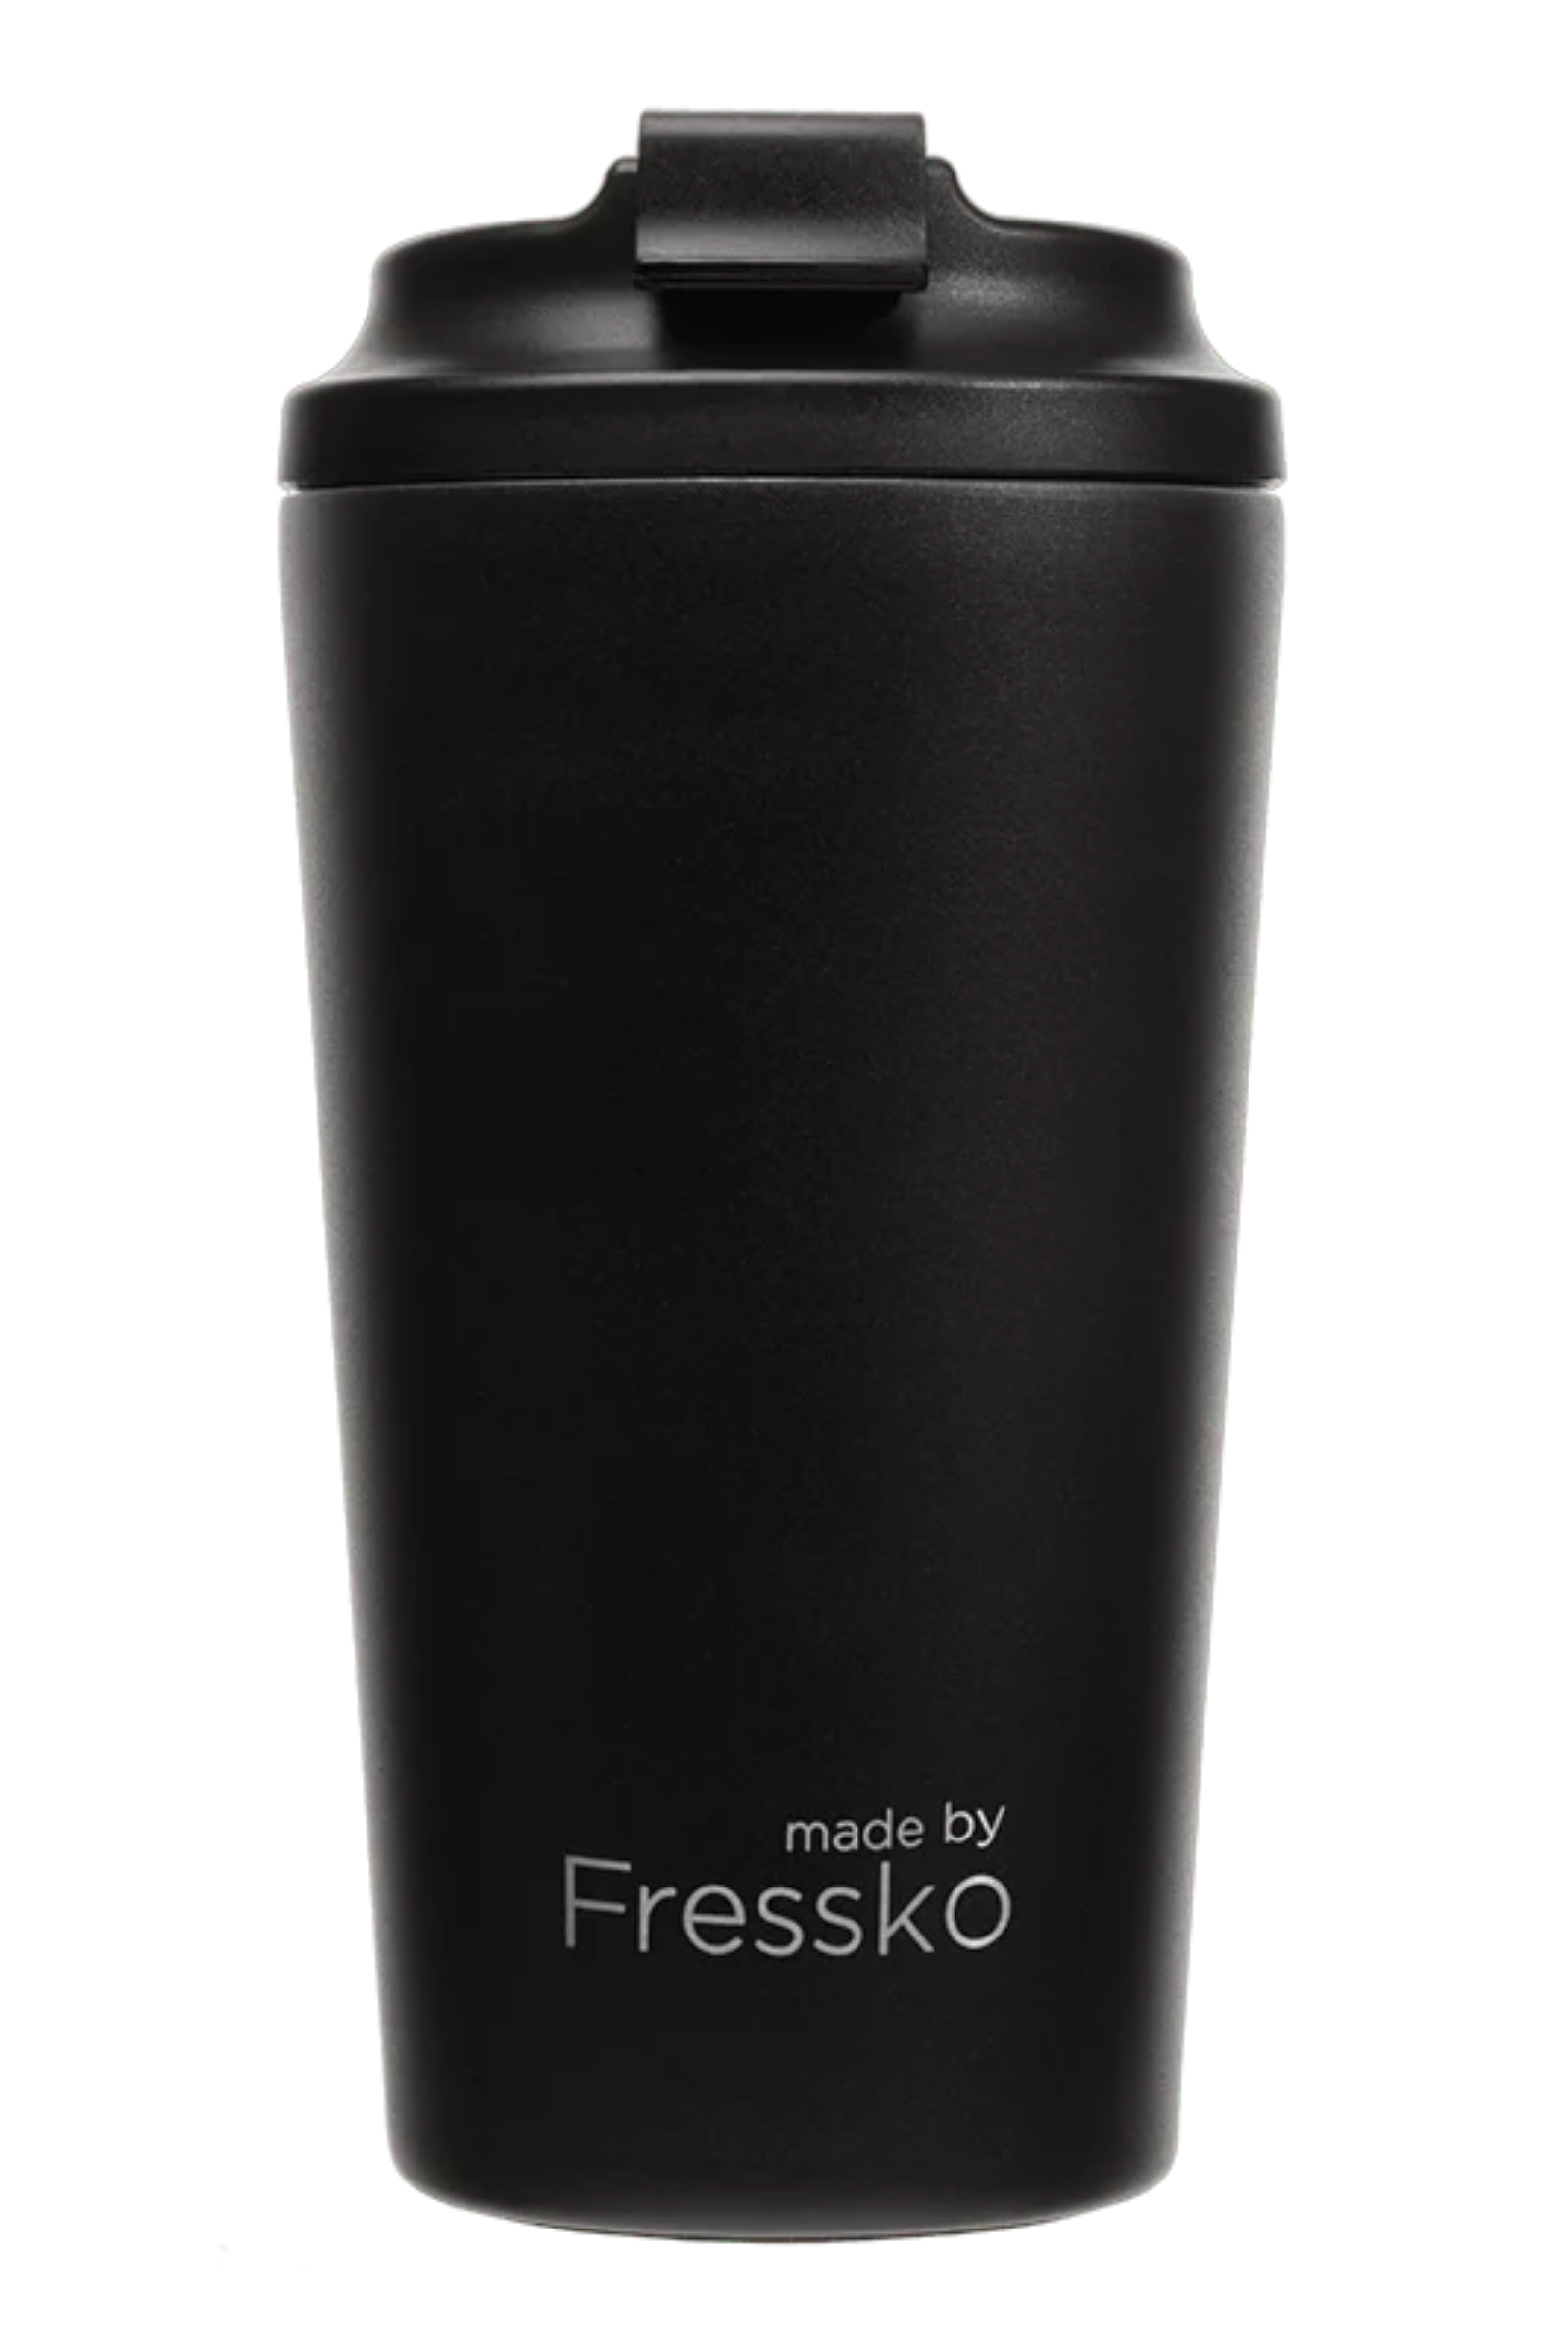 Fressko Reusable Cup Grande 16oz Black